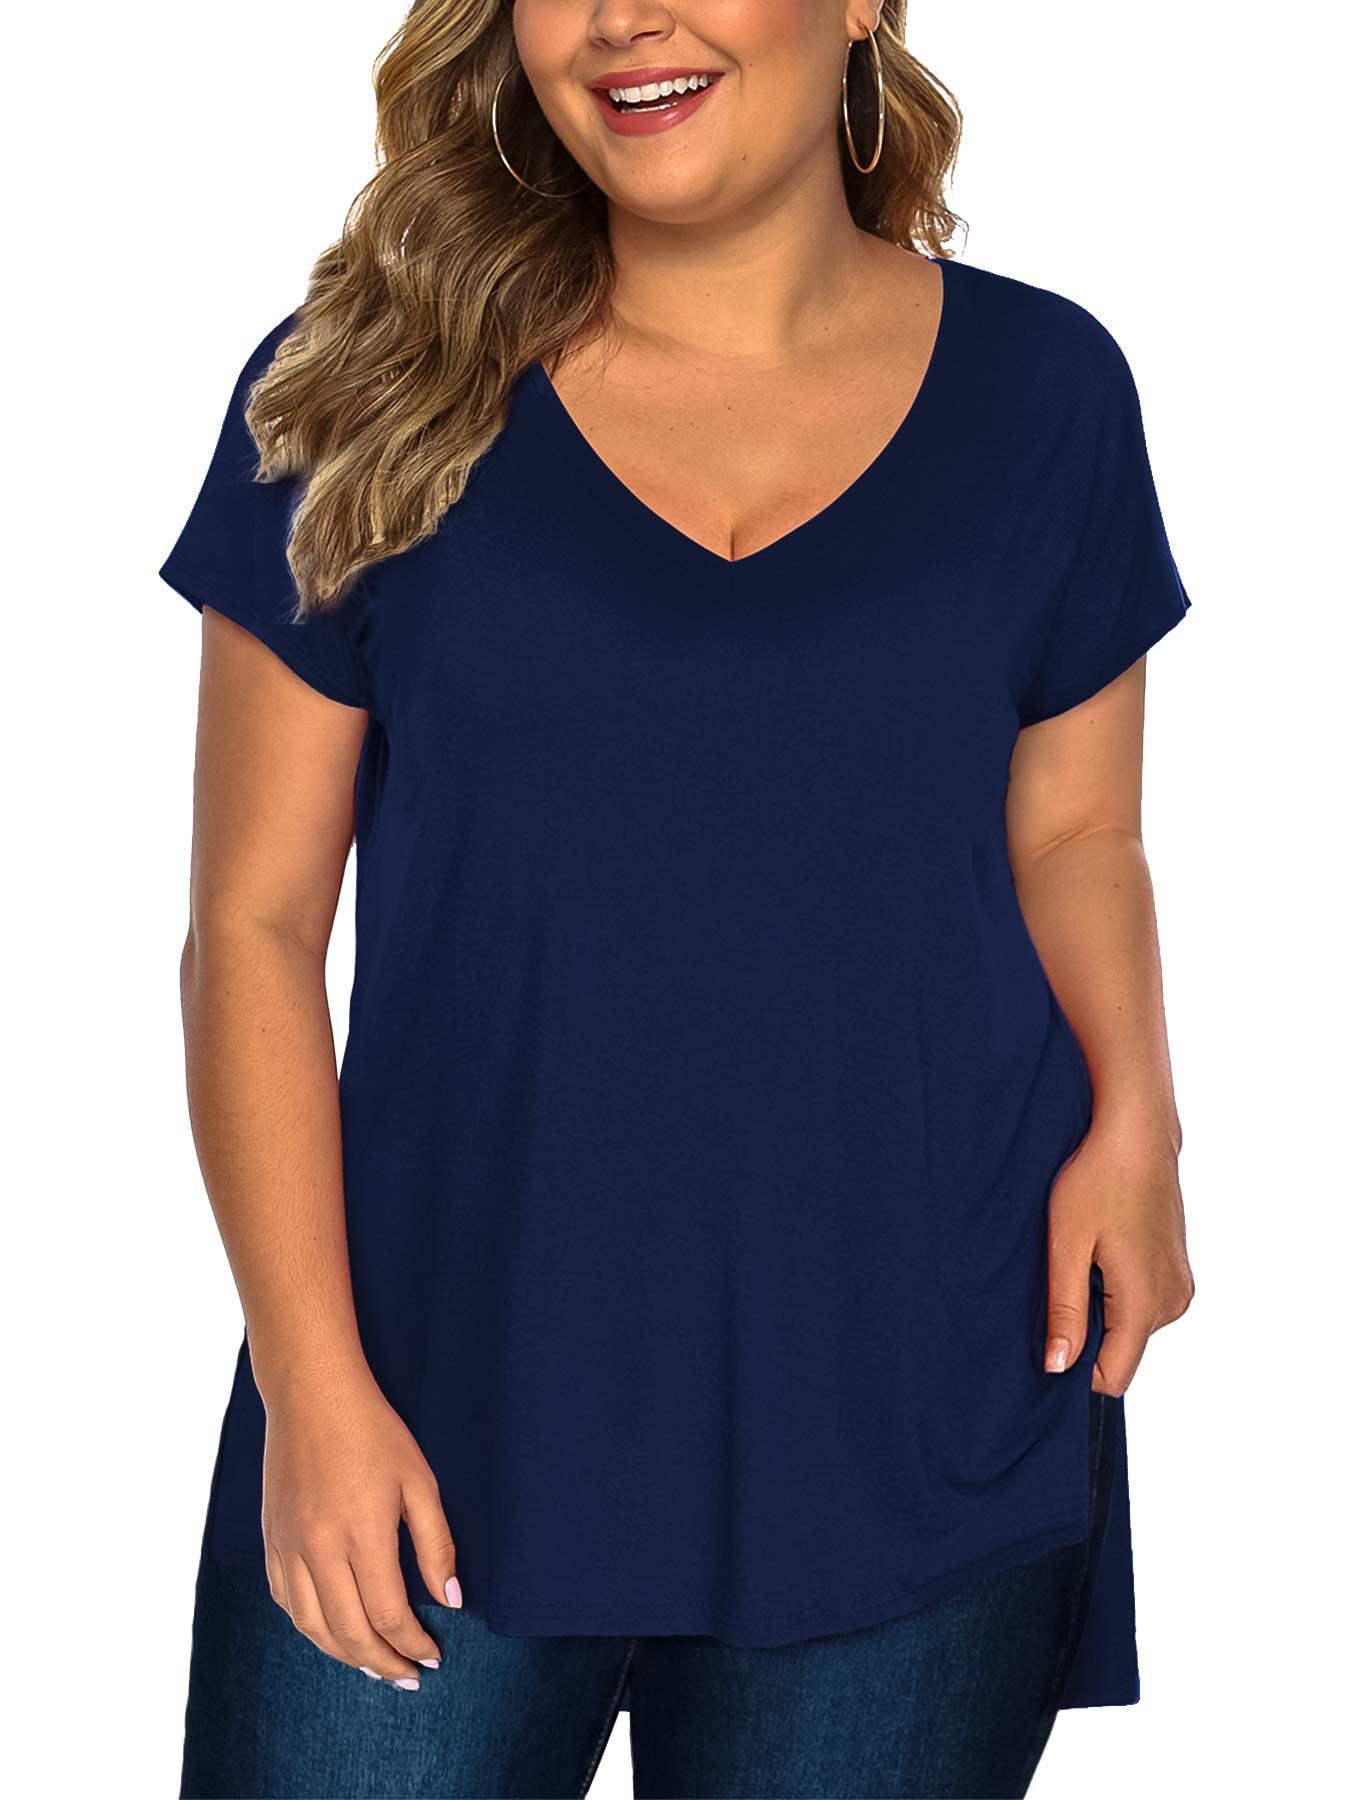 Amoretu Womens Plus Size Tops Short Sleeve Tee Shirts for Summer XL-5XL 